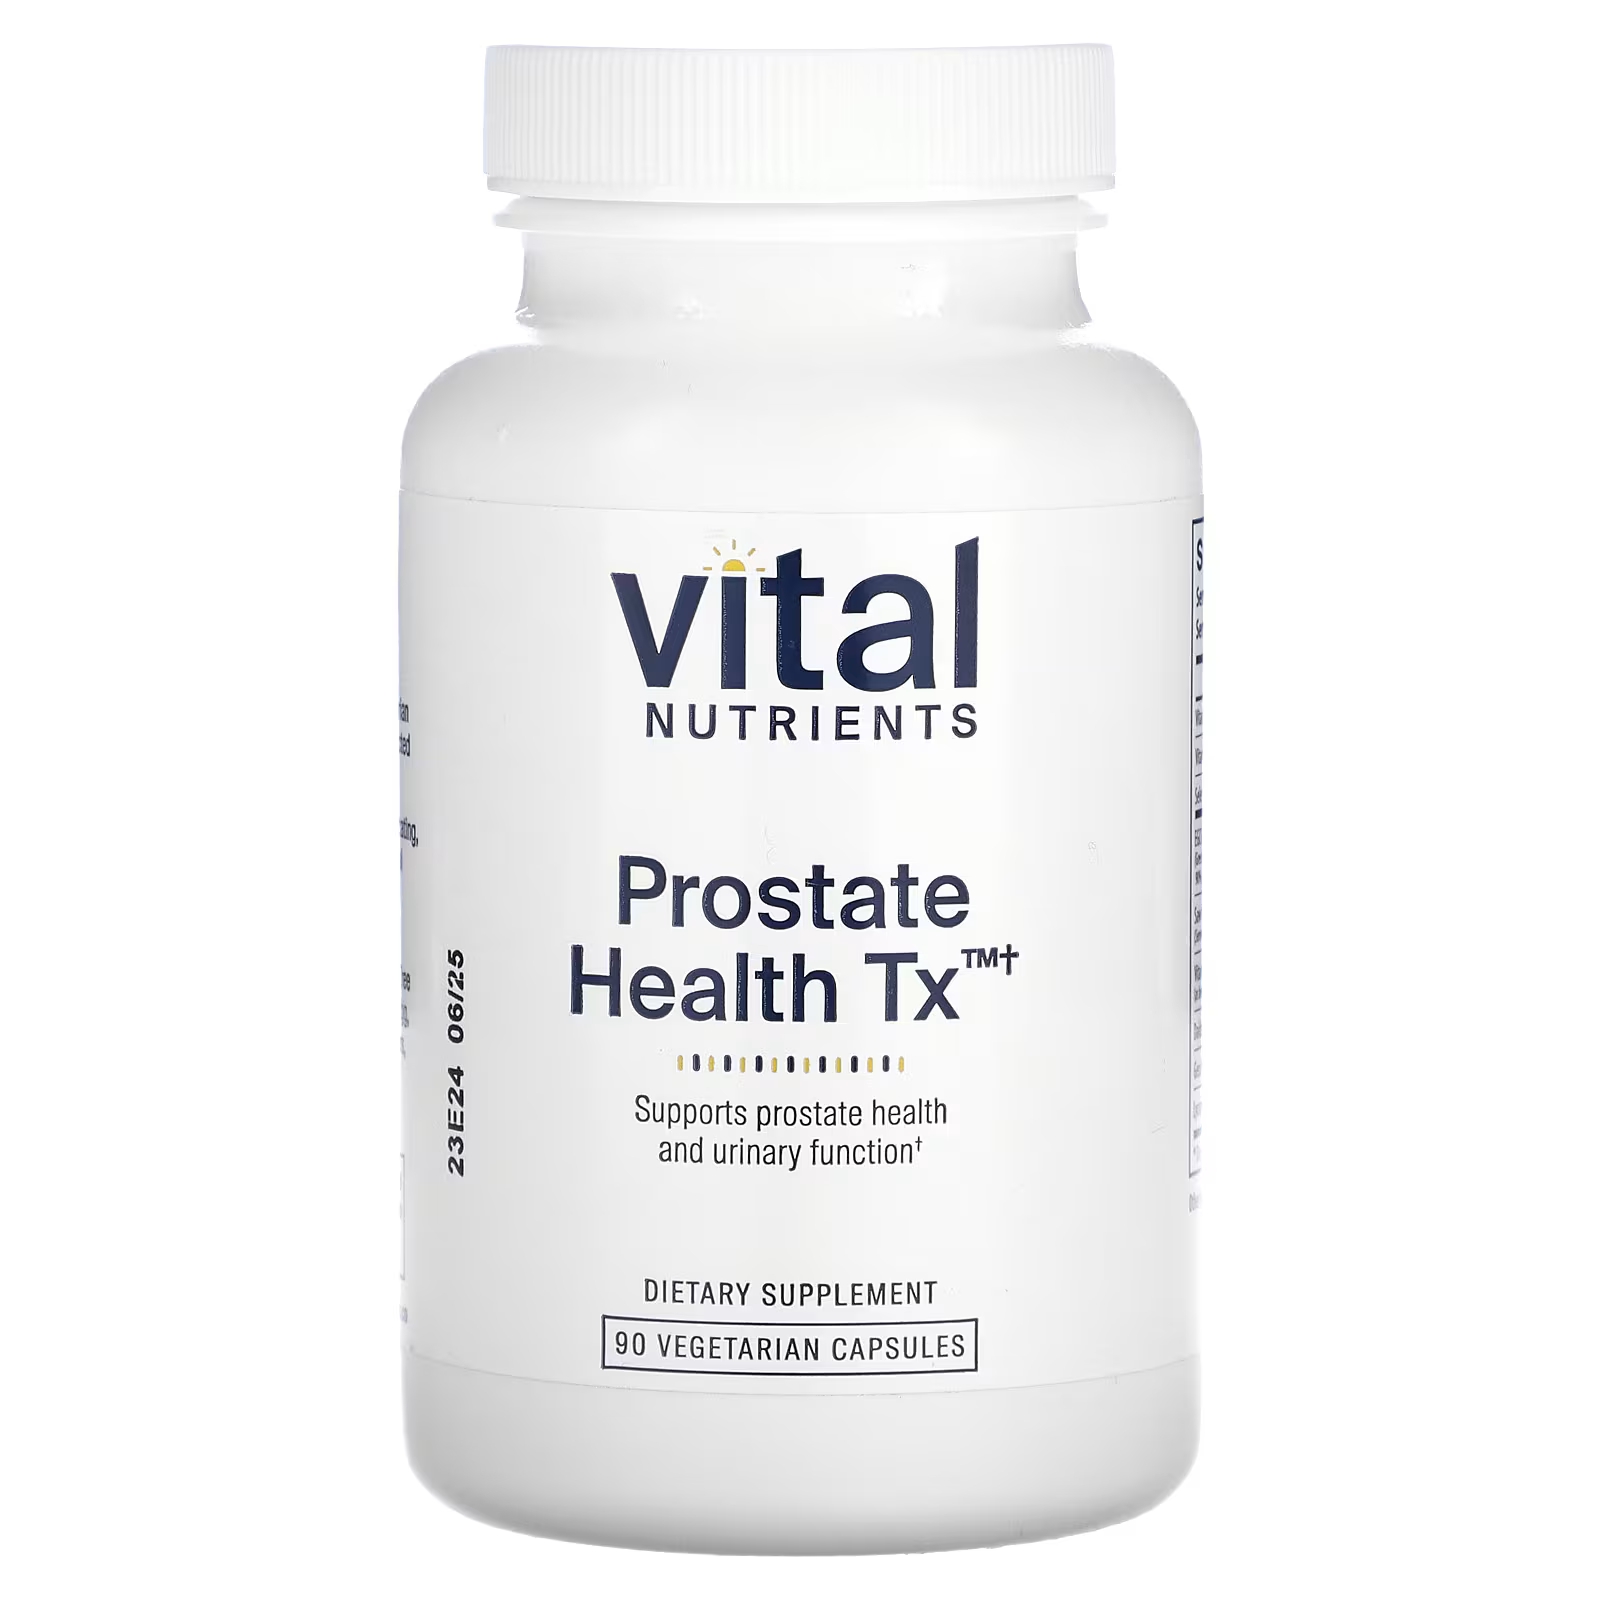 Пищевая добавка Vital Nutrients Prostate Health Tx, 90 капсул